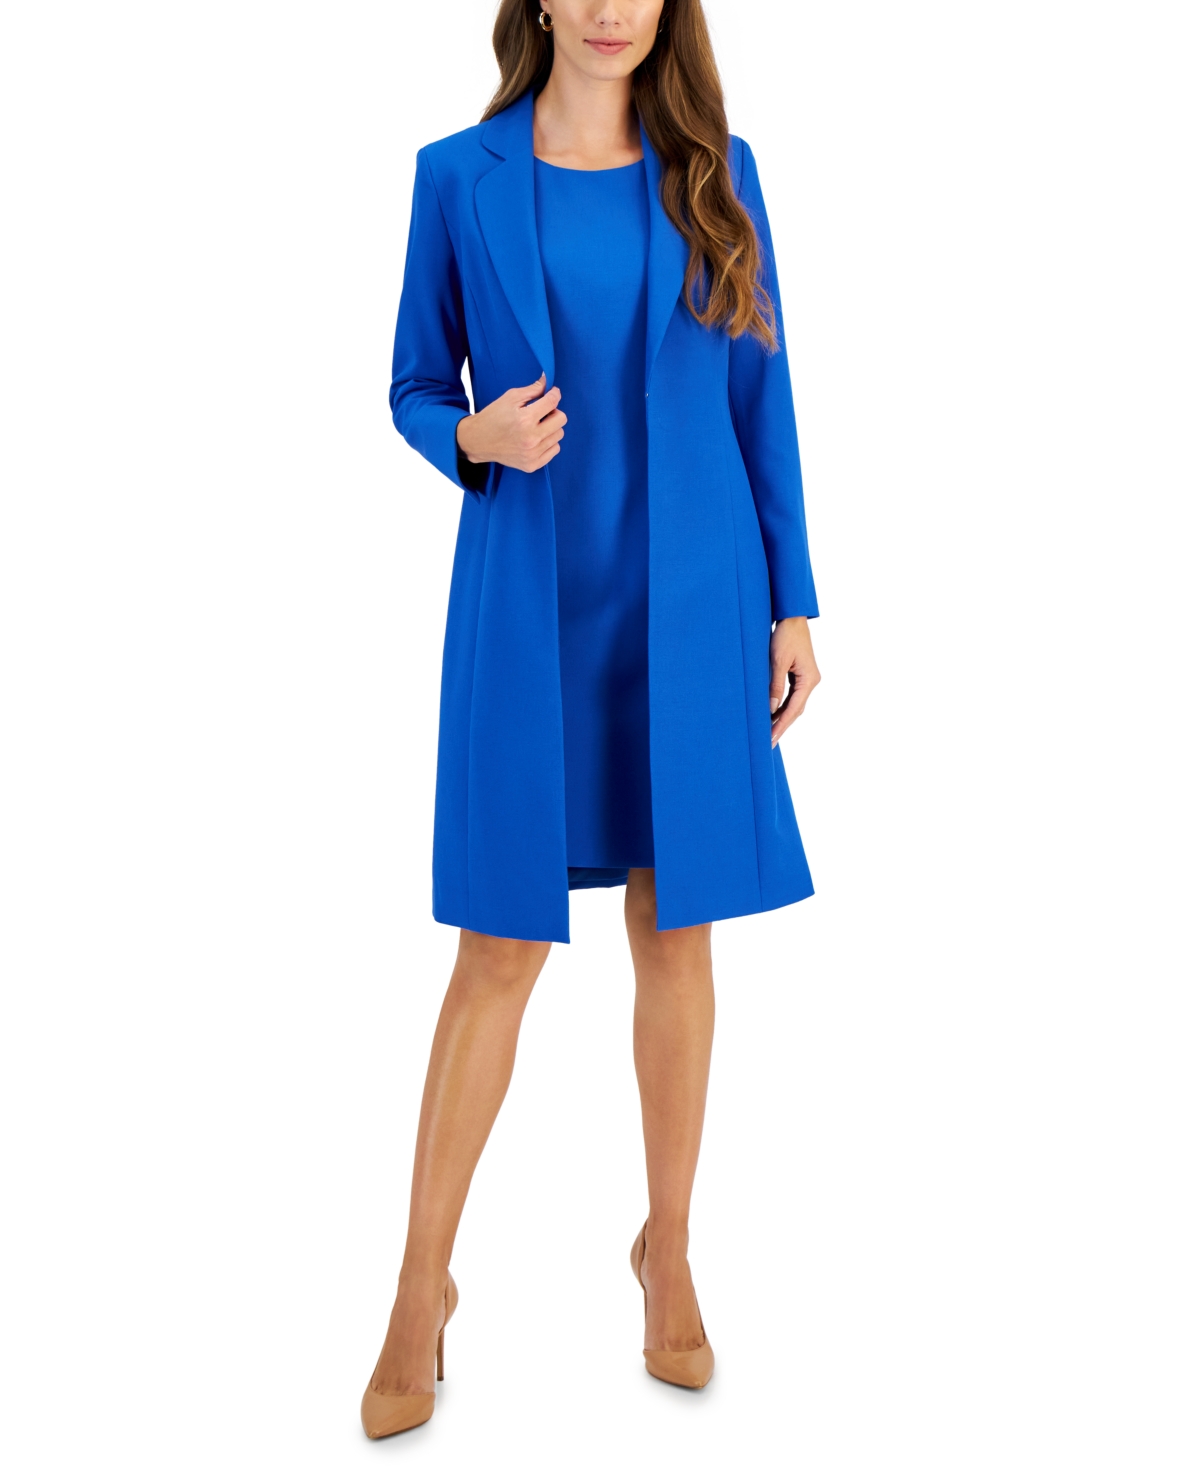 Women's Crepe Topper Jacket & Sheath Dress Suit, Regular and Petite Sizes - Cabana Blue